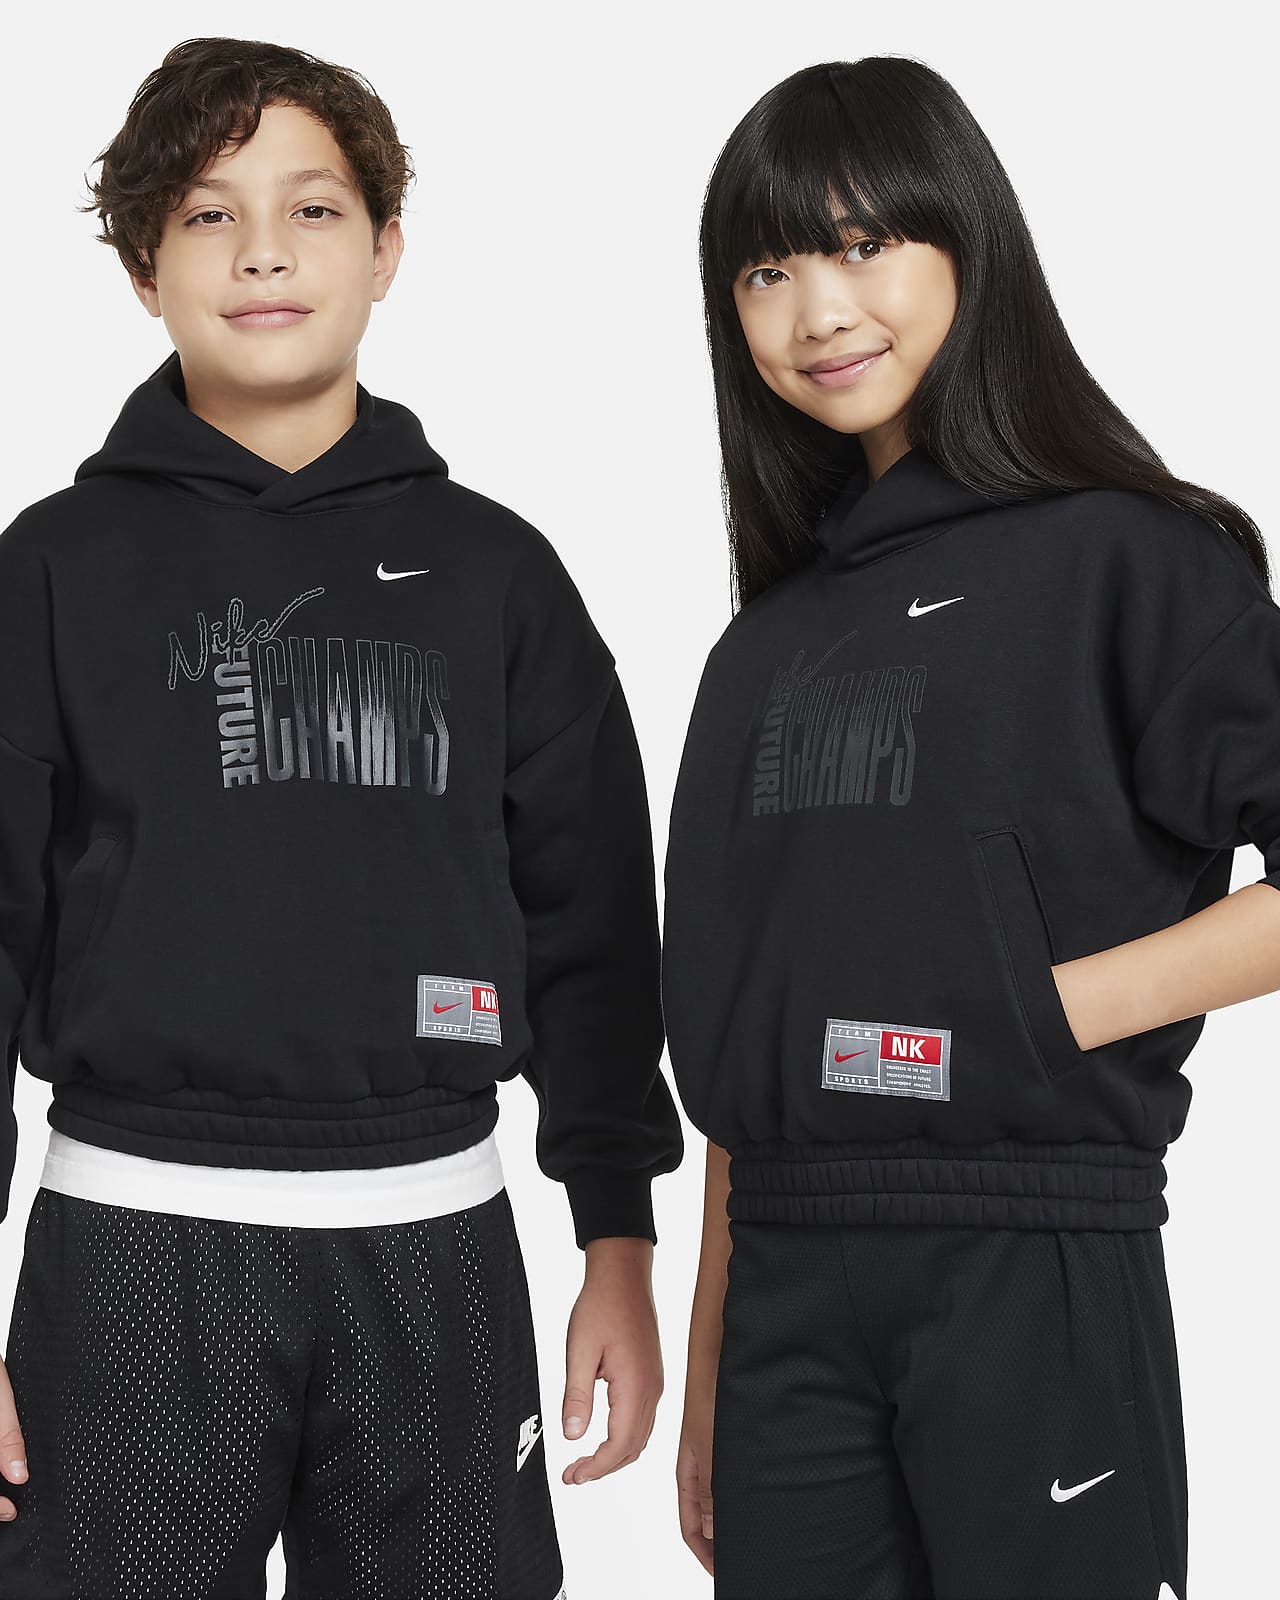 Nike Culture of Basketball Fleece Hoodie für ältere Kinder